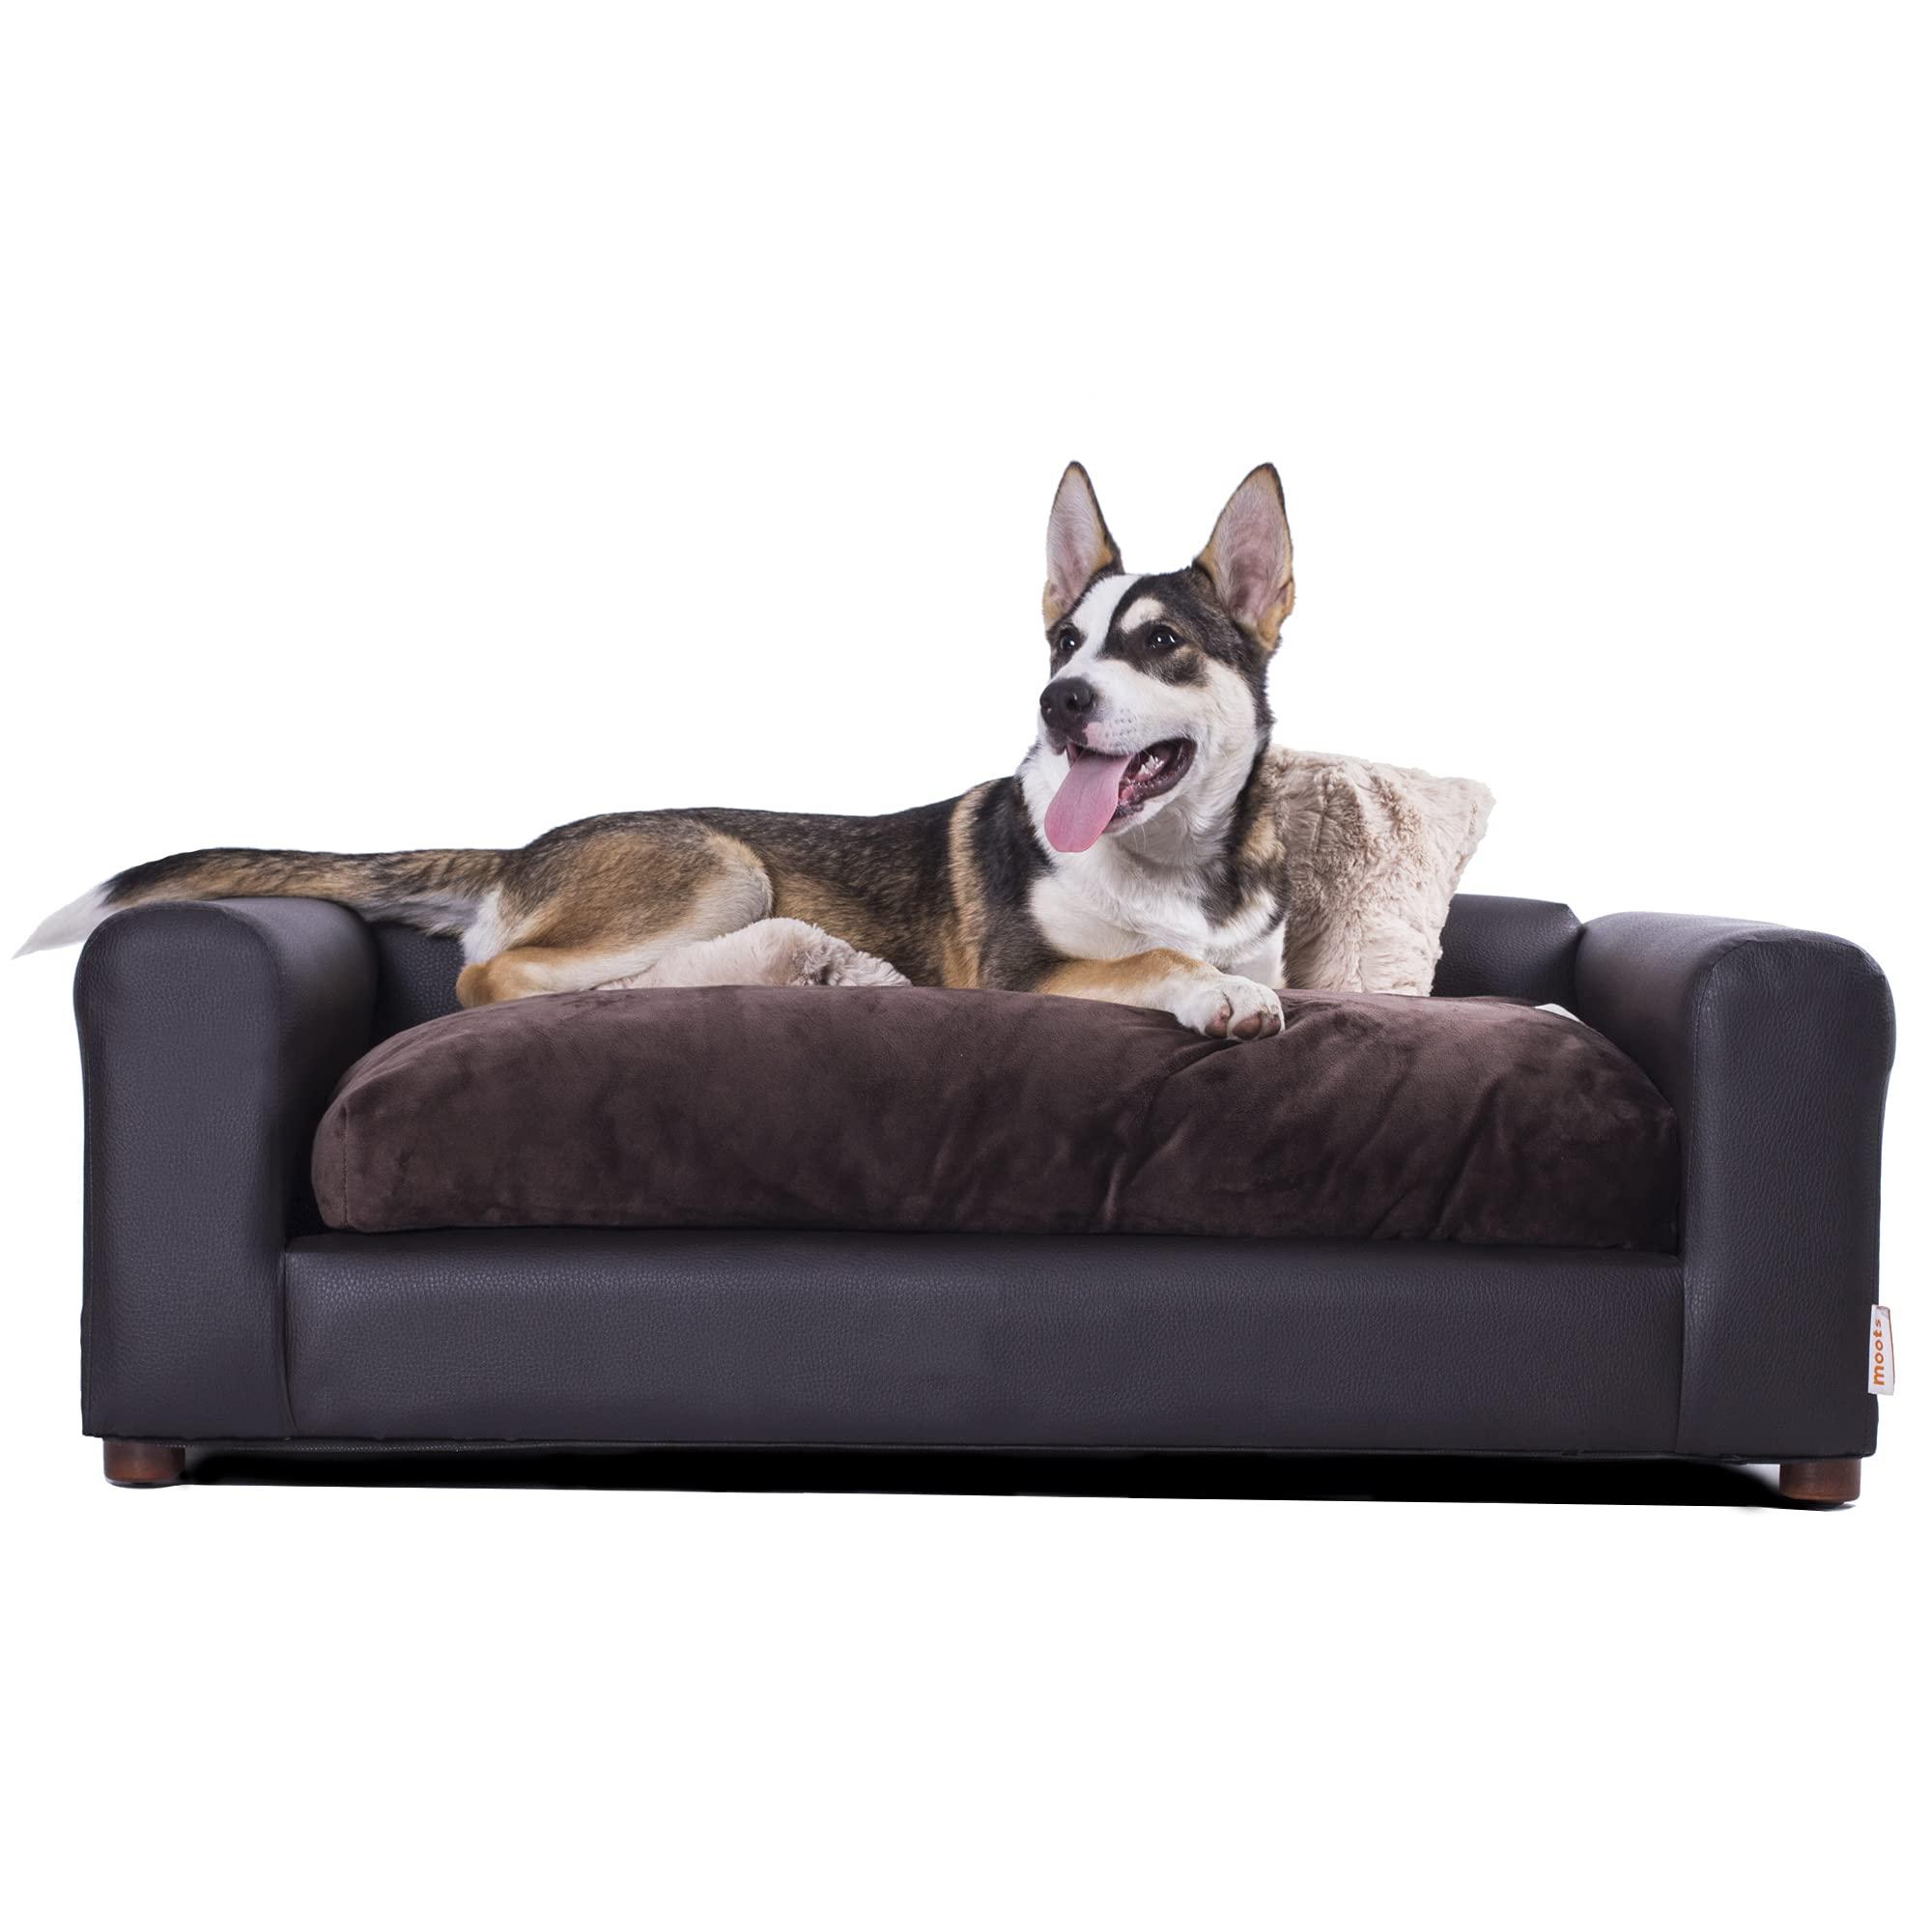 Moots Premium Leatherette Pets Sofa, Regular, Espresso, Large